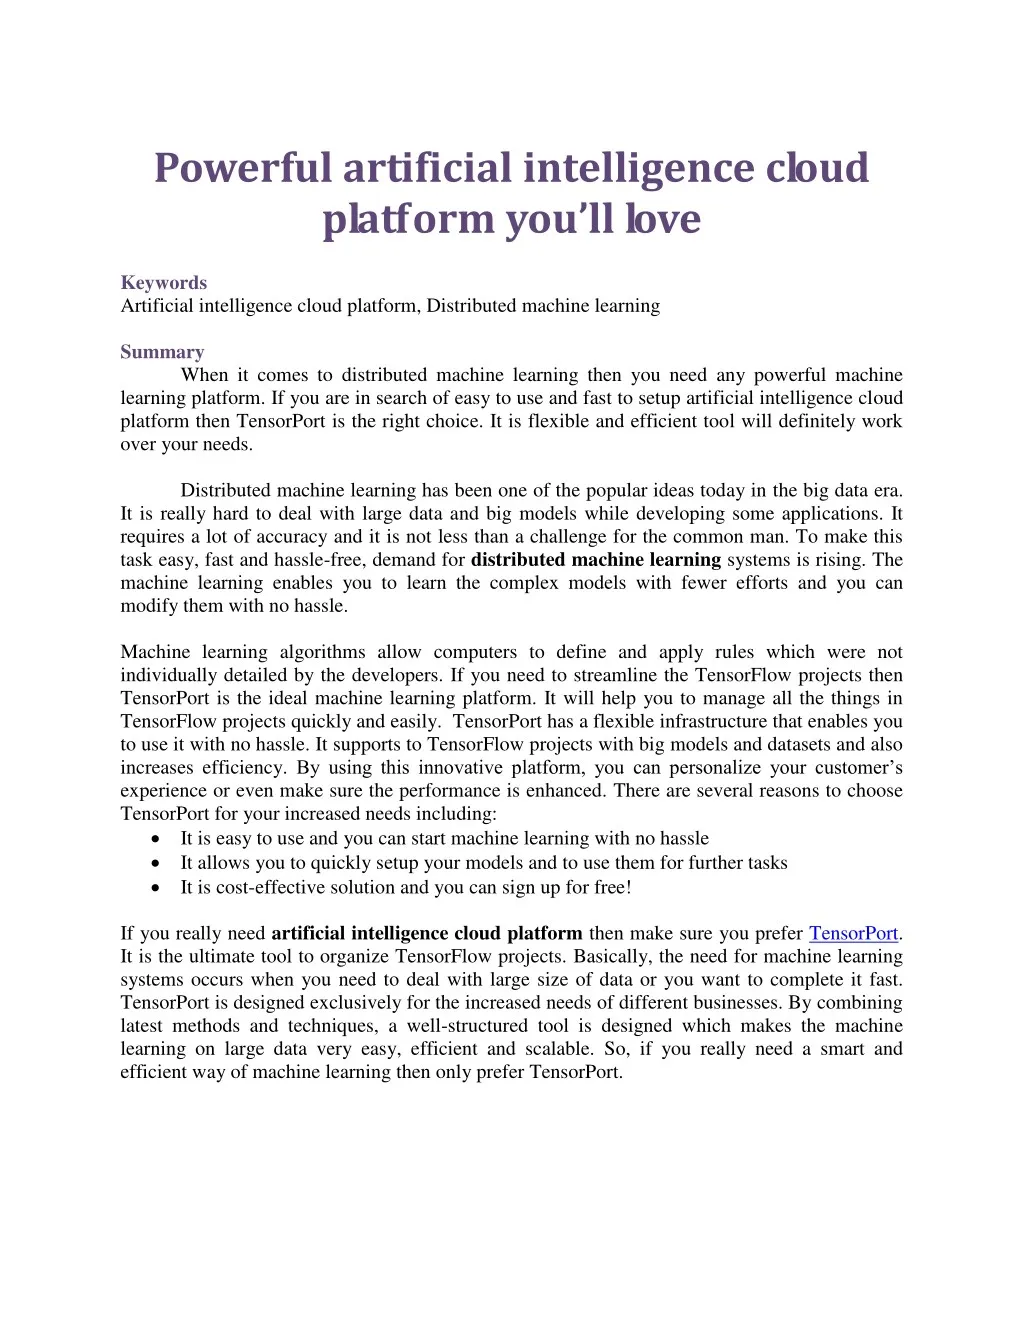 powerful artificial intelligence cloud platform